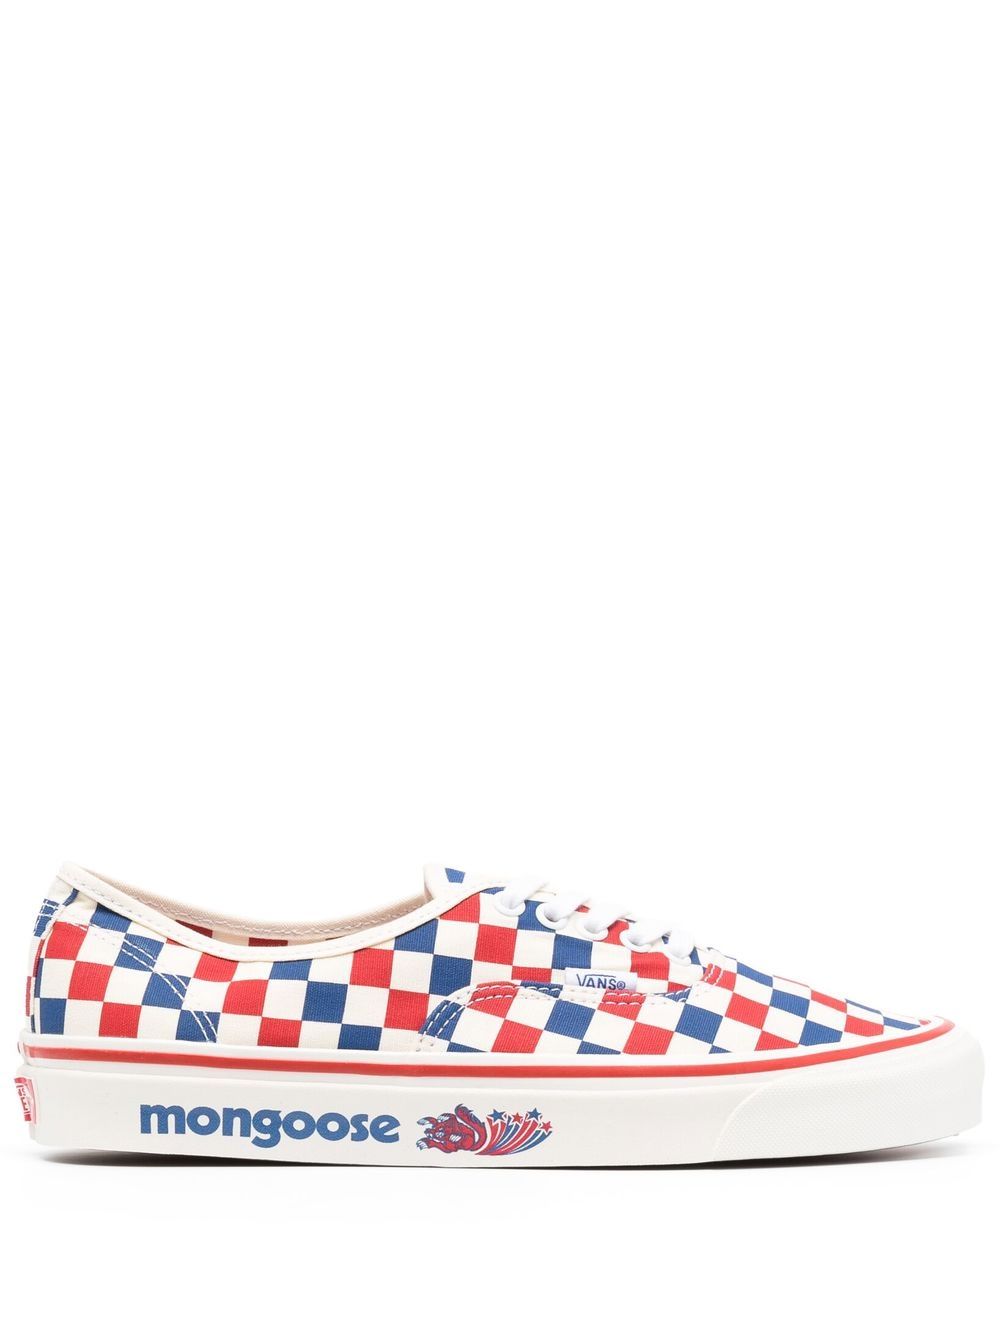 Vans x Moongoose<BR/>Multicolour check sneakers